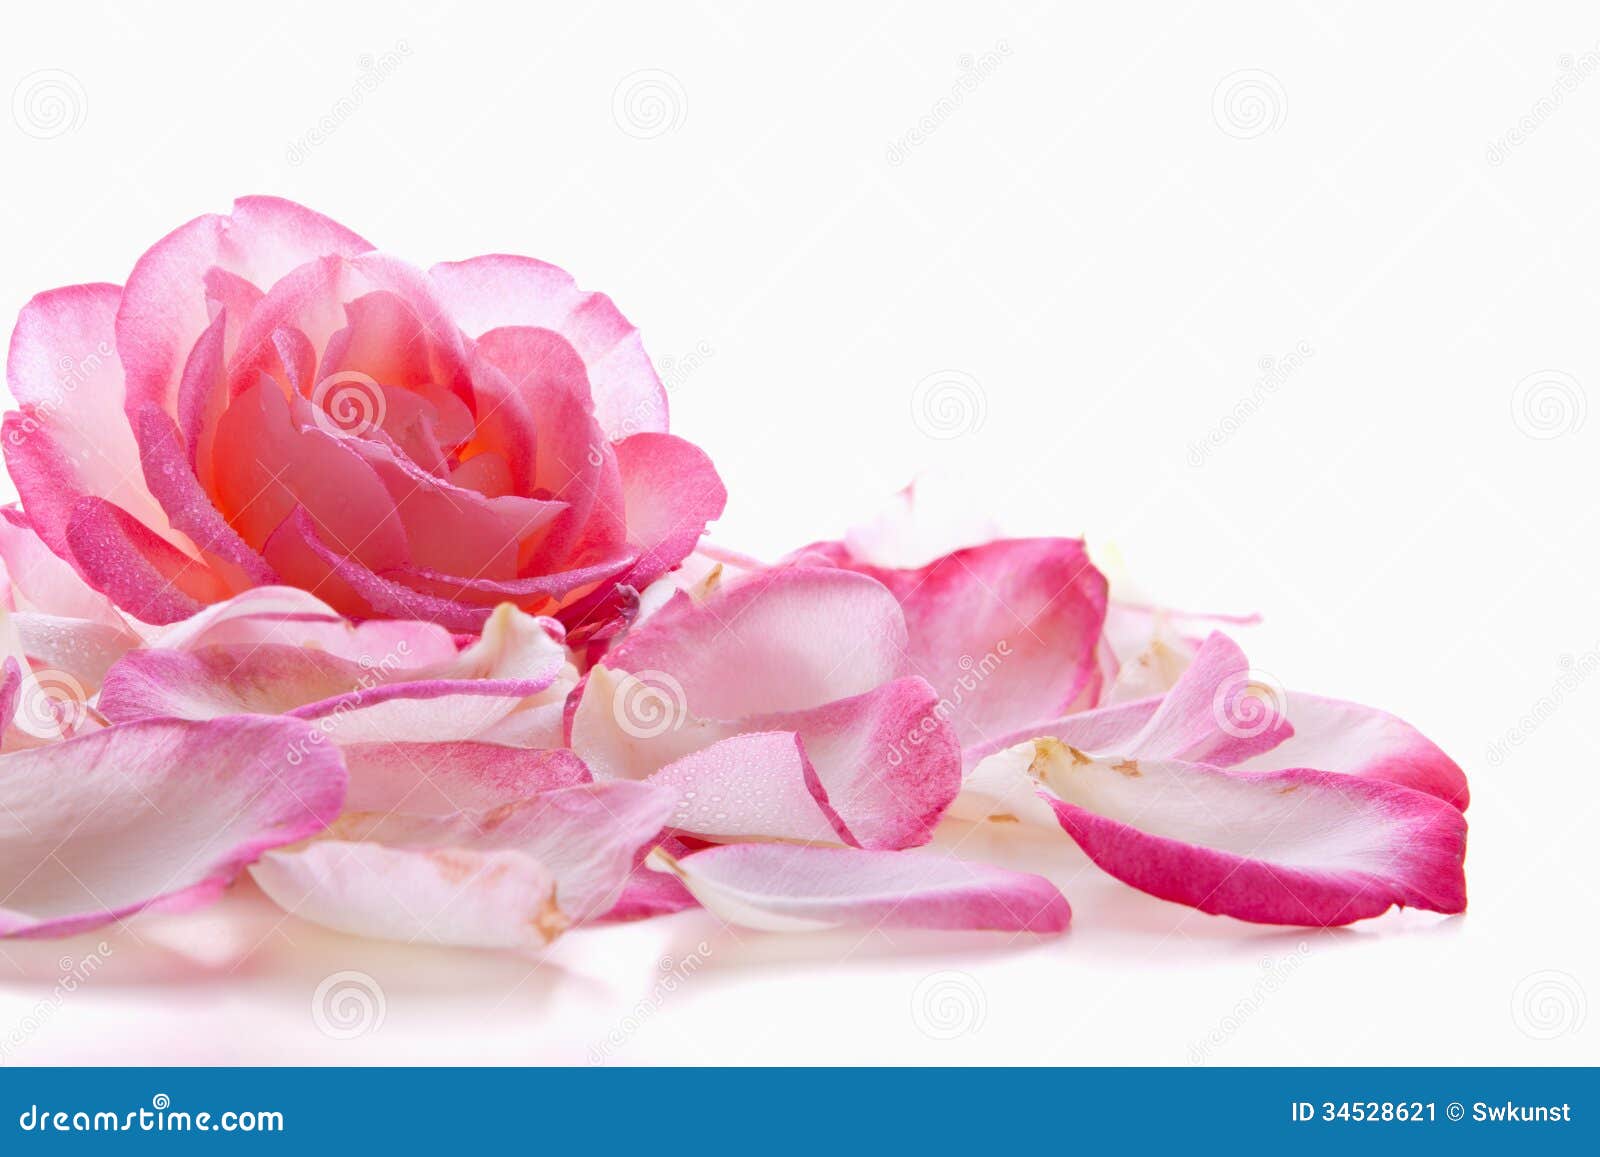 pink rose petals.